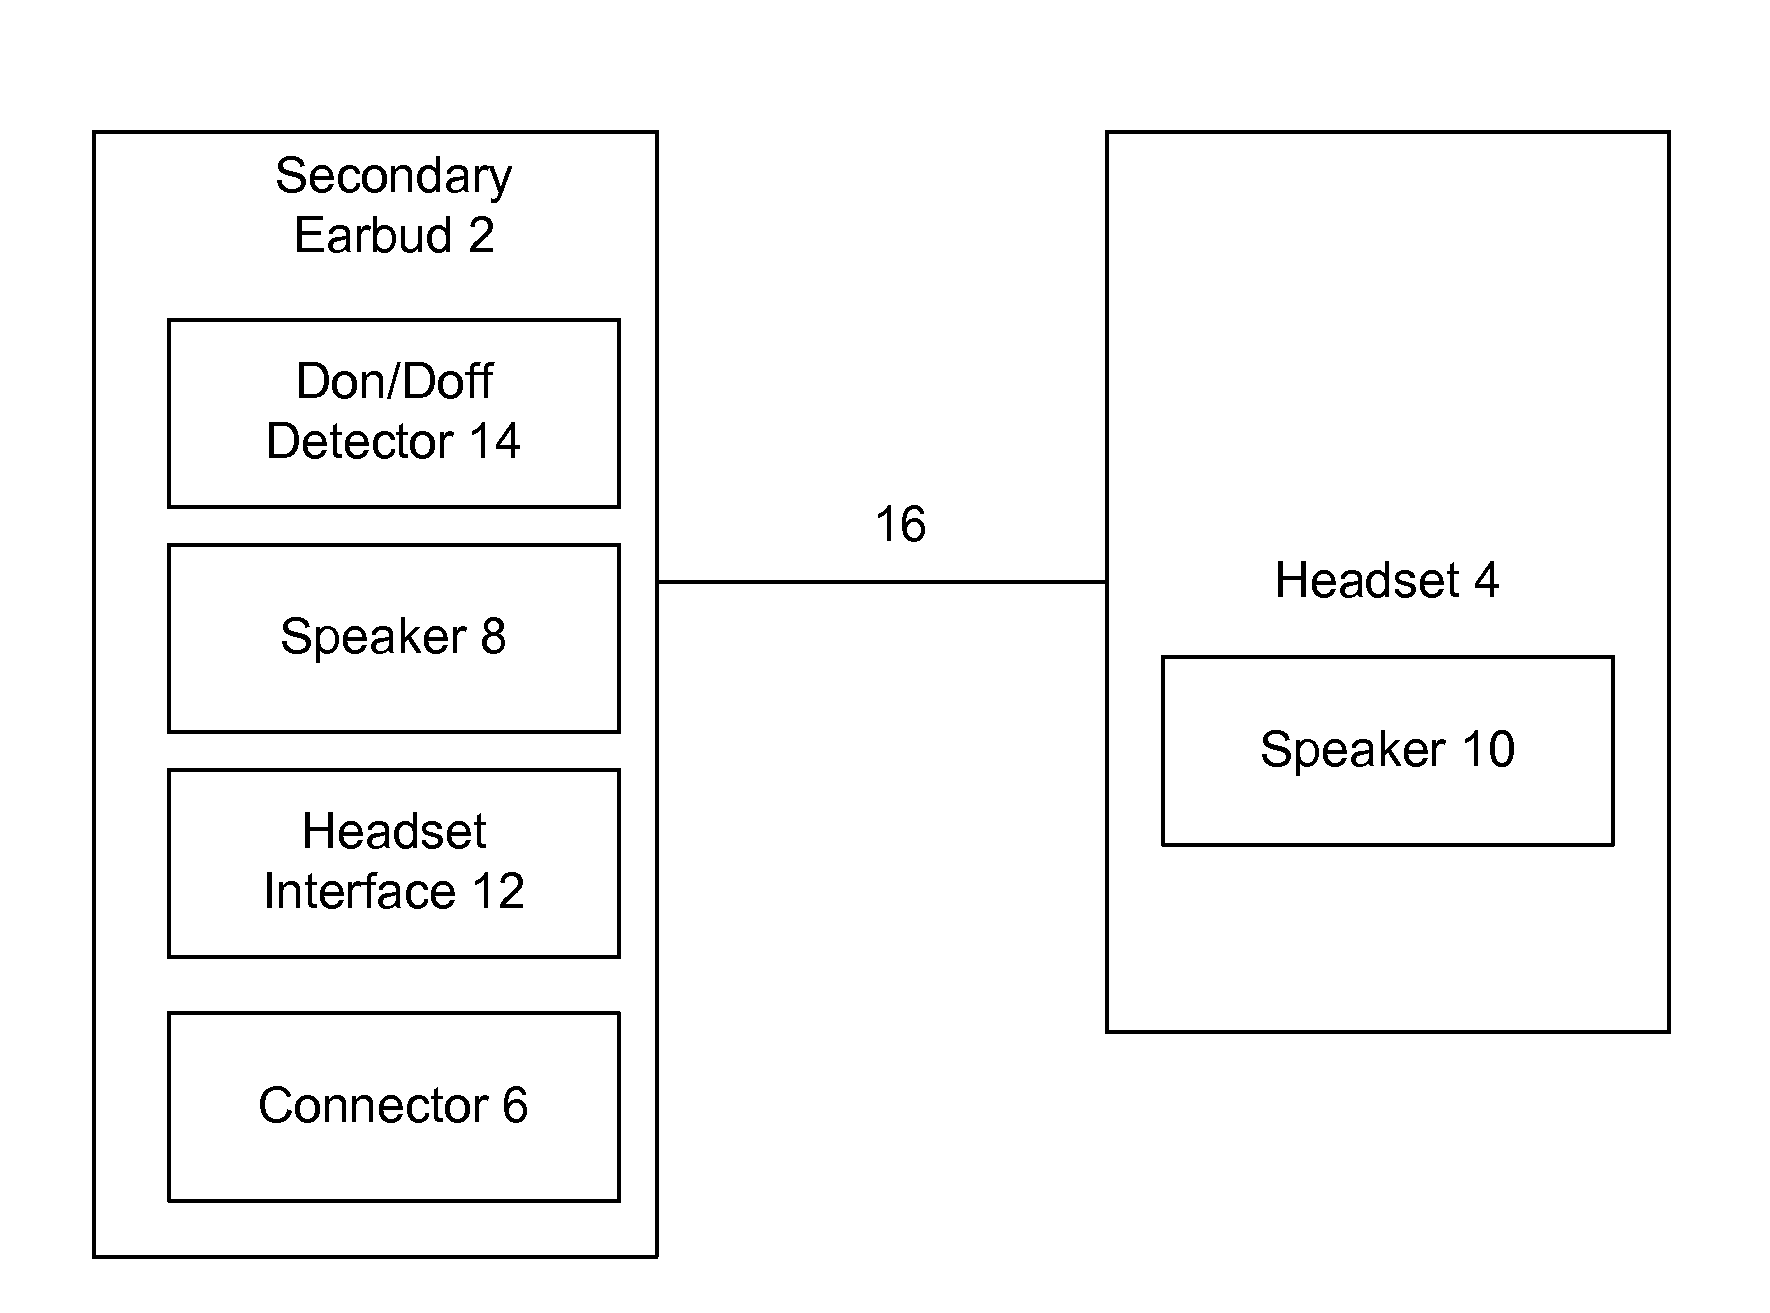 Headset wearing mode based operation